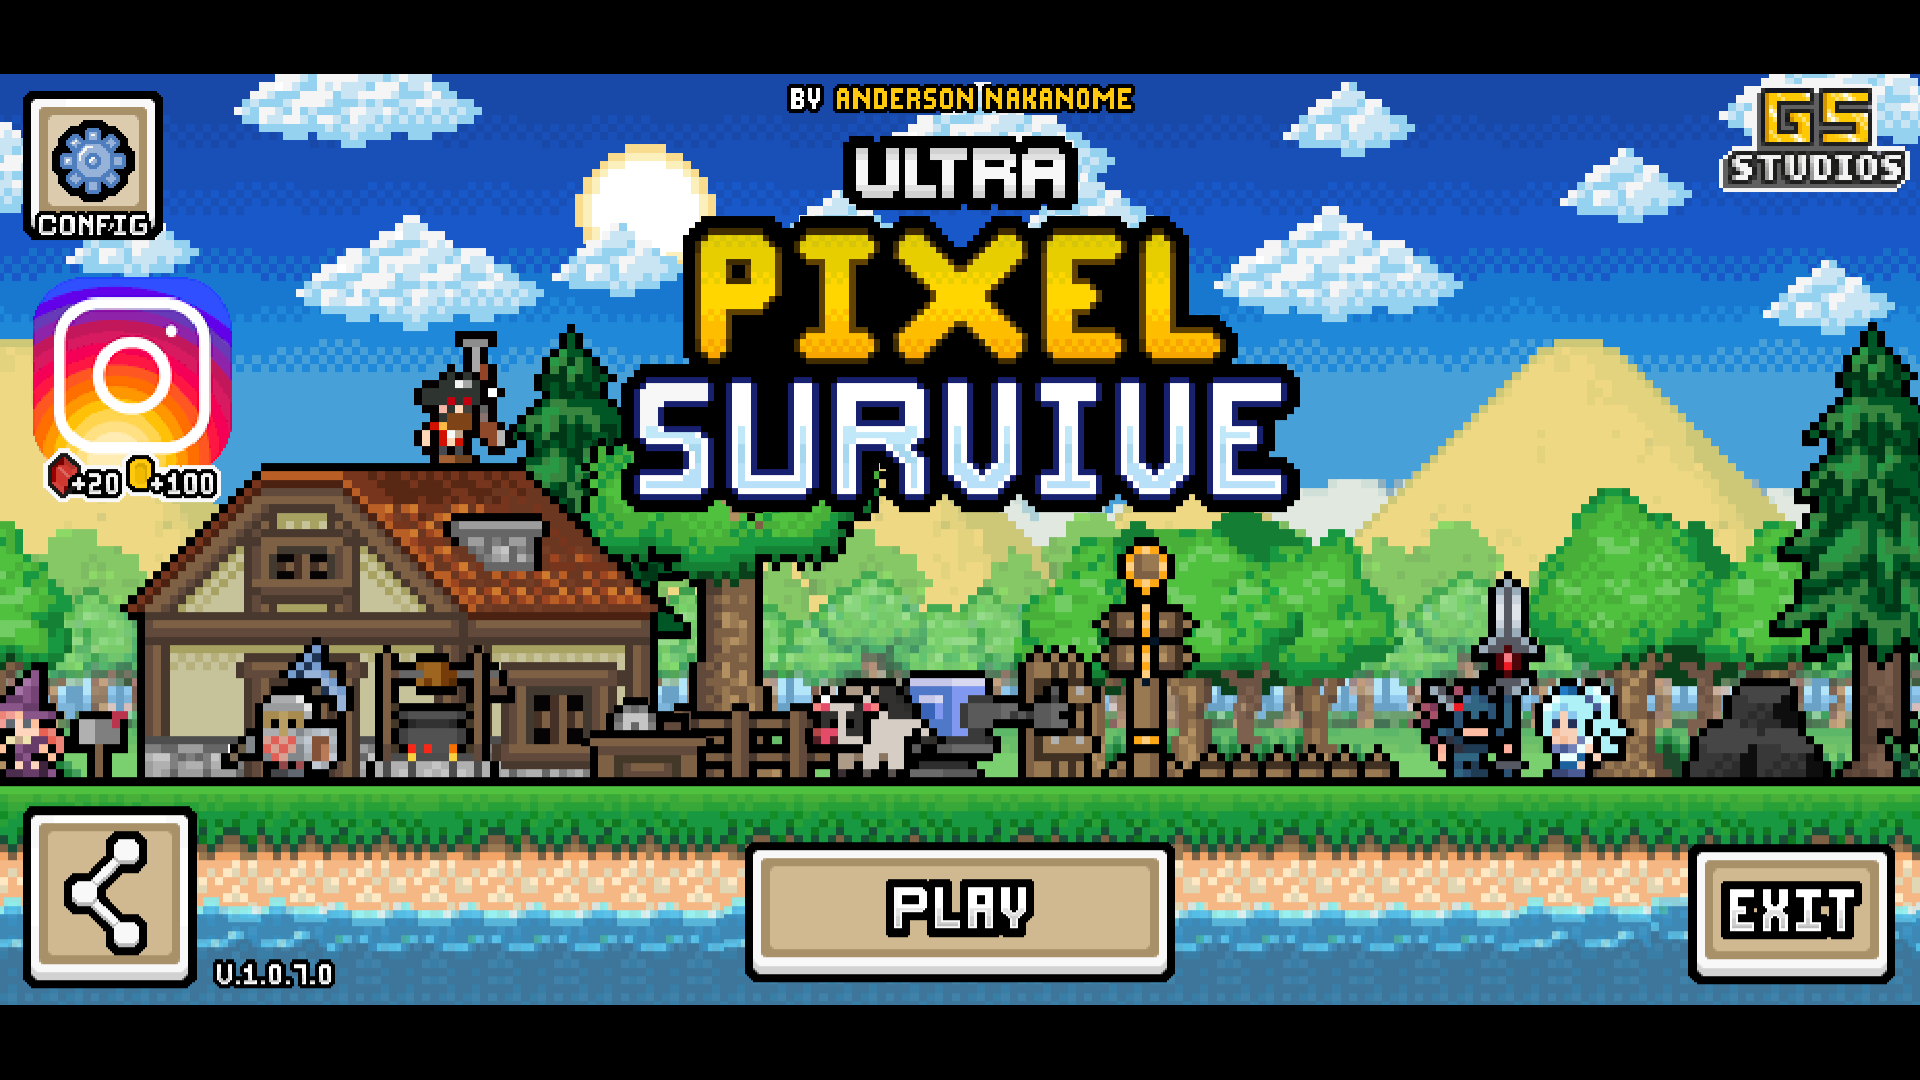 Ultra Pixel Survive